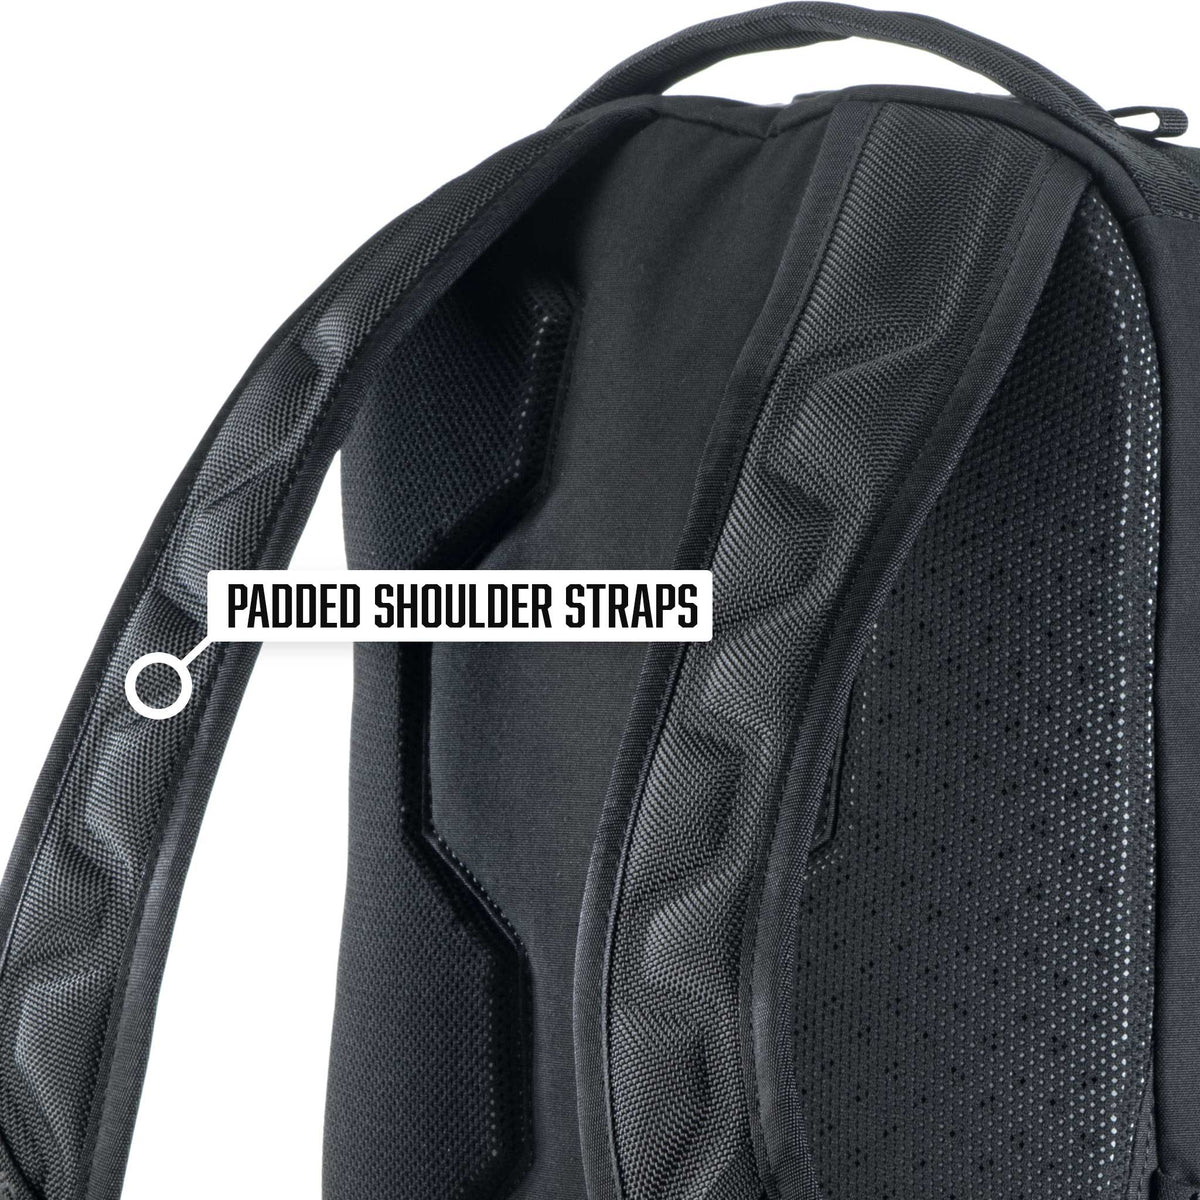 Pelican MPB20 Backpack has padded shoulder straps